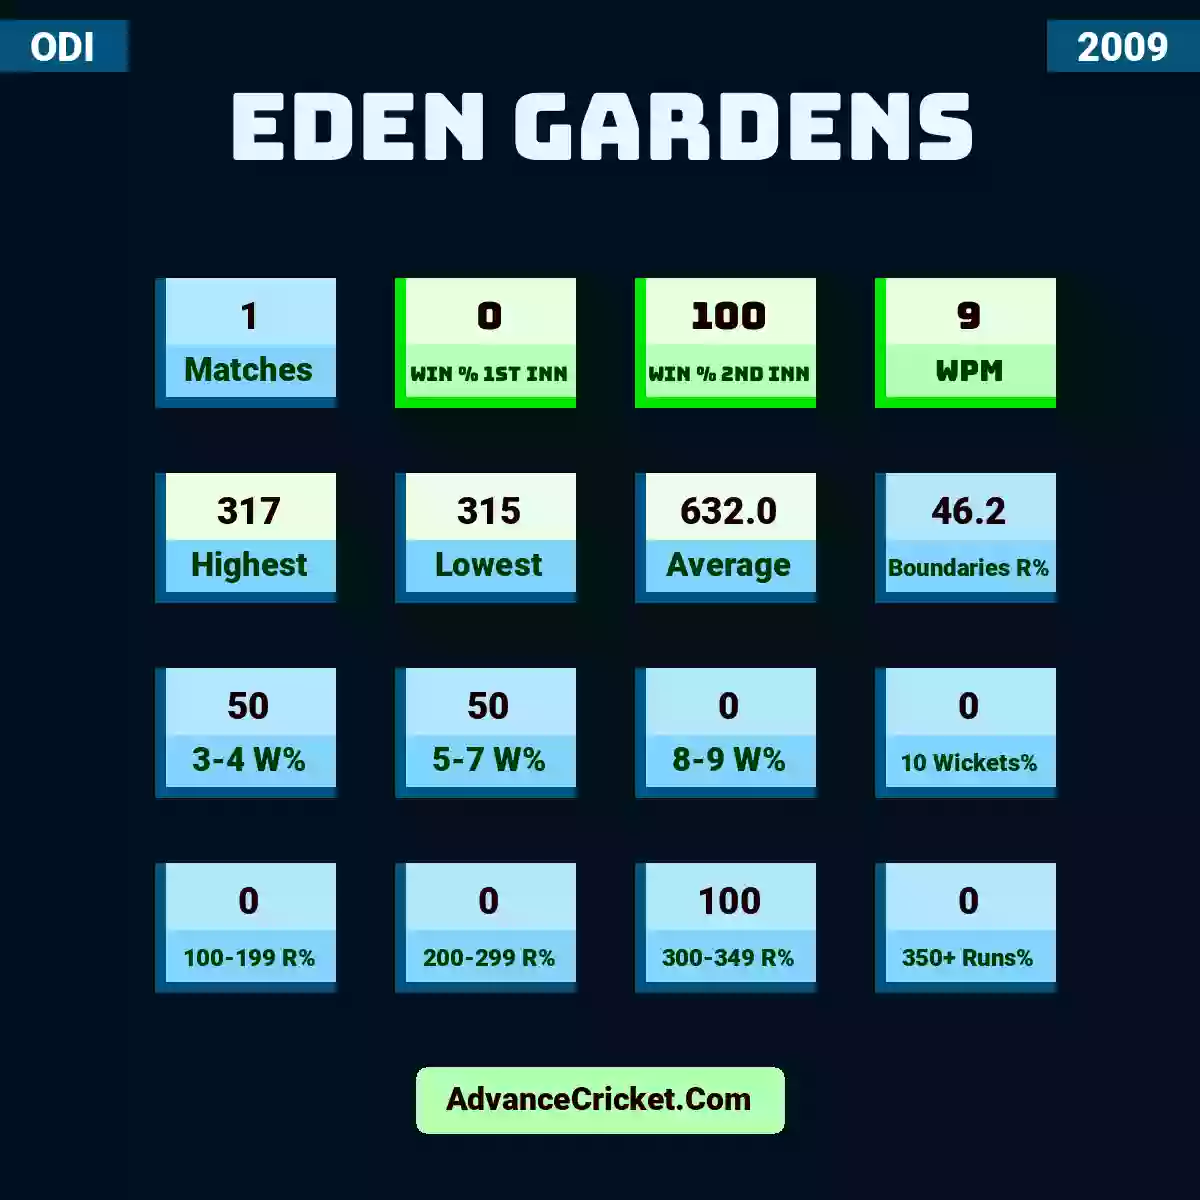 Image showing Eden Gardens with Matches: 1, Win % 1st Inn: 0, Win % 2nd Inn: 100, WPM: 9, Highest: 317, Lowest: 315, Average: 632.0, Boundaries R%: 46.2, 3-4 W%: 50, 5-7 W%: 50, 8-9 W%: 0, 10 Wickets%: 0, 100-199 R%: 0, 200-299 R%: 0, 300-349 R%: 100, 350+ Runs%: 0.